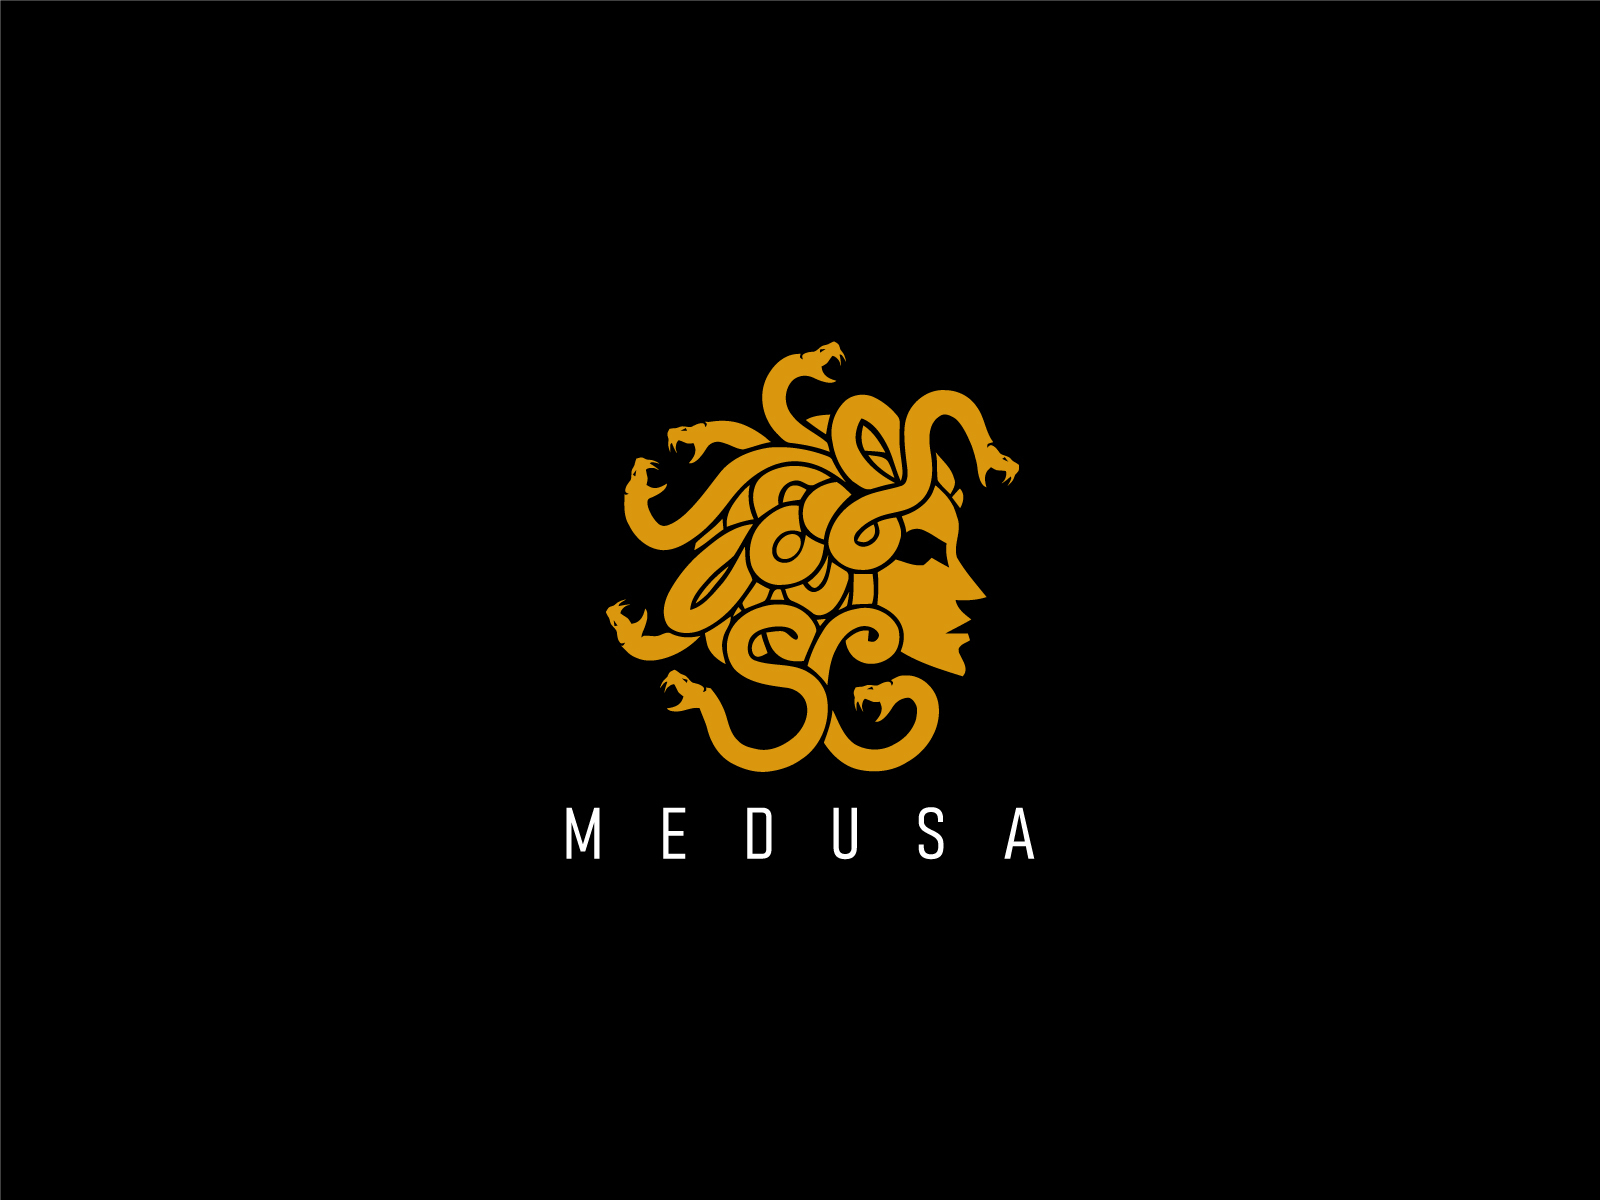 Medusa Logo by HUSSNAIN GRAPHICS on Dribbble